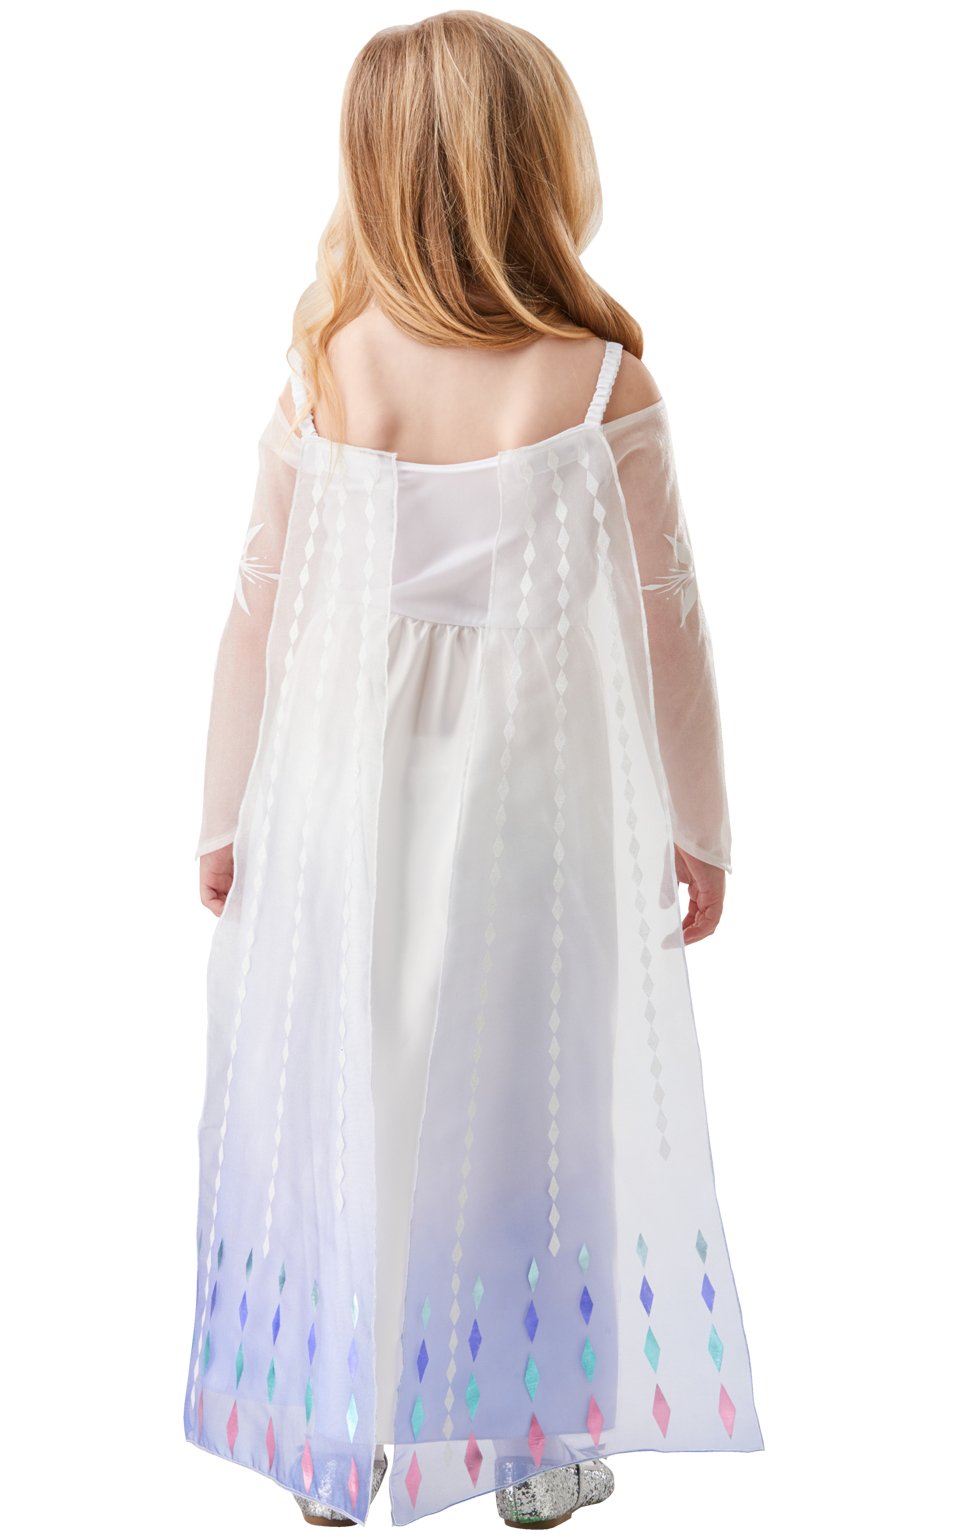 Frozen 2 Frozen Elsa Epilogue Dress Costume_2 rub-3007795-6